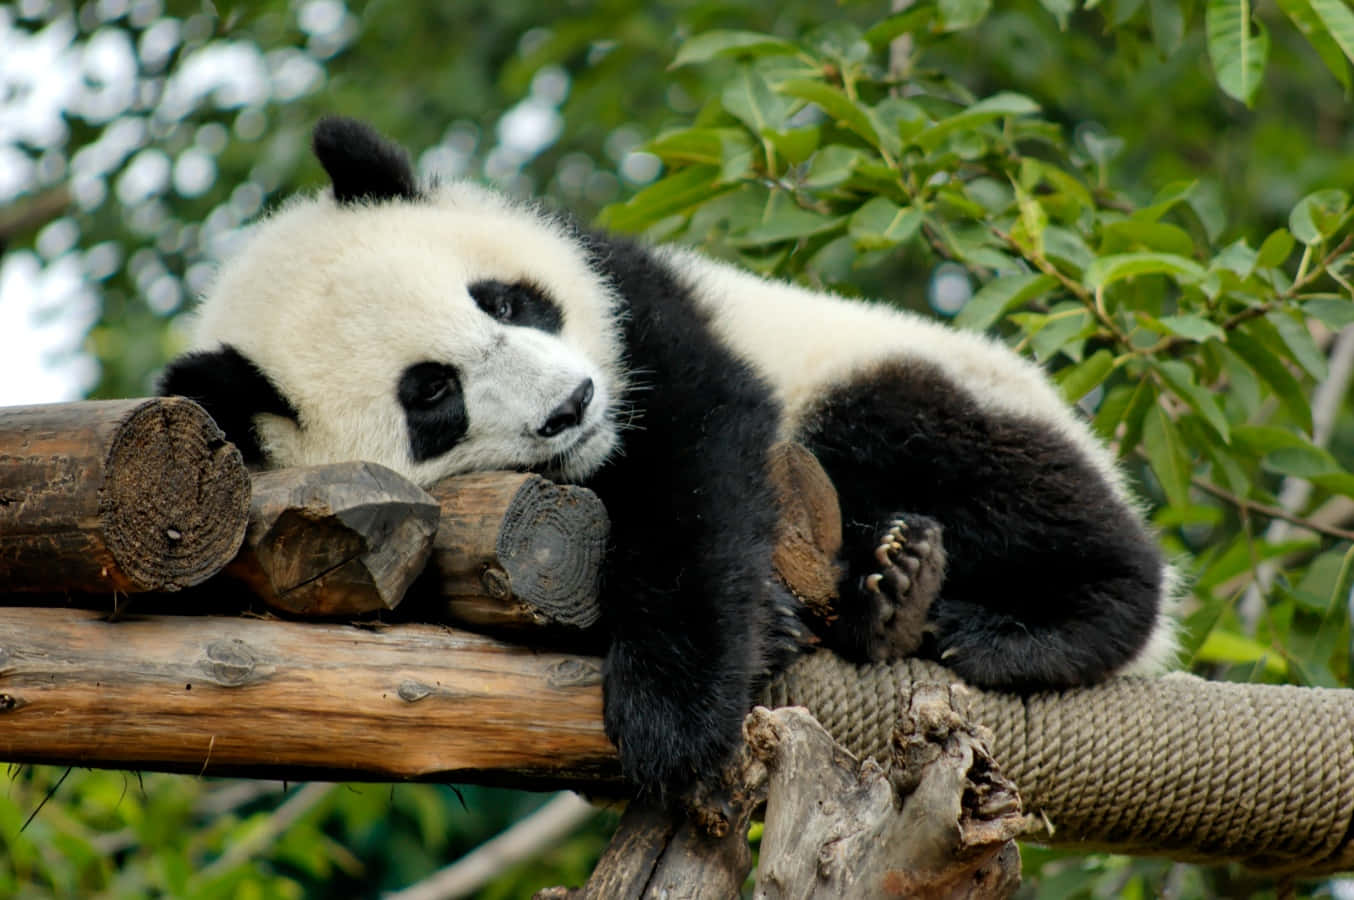 A cute panda munching on some bamboo